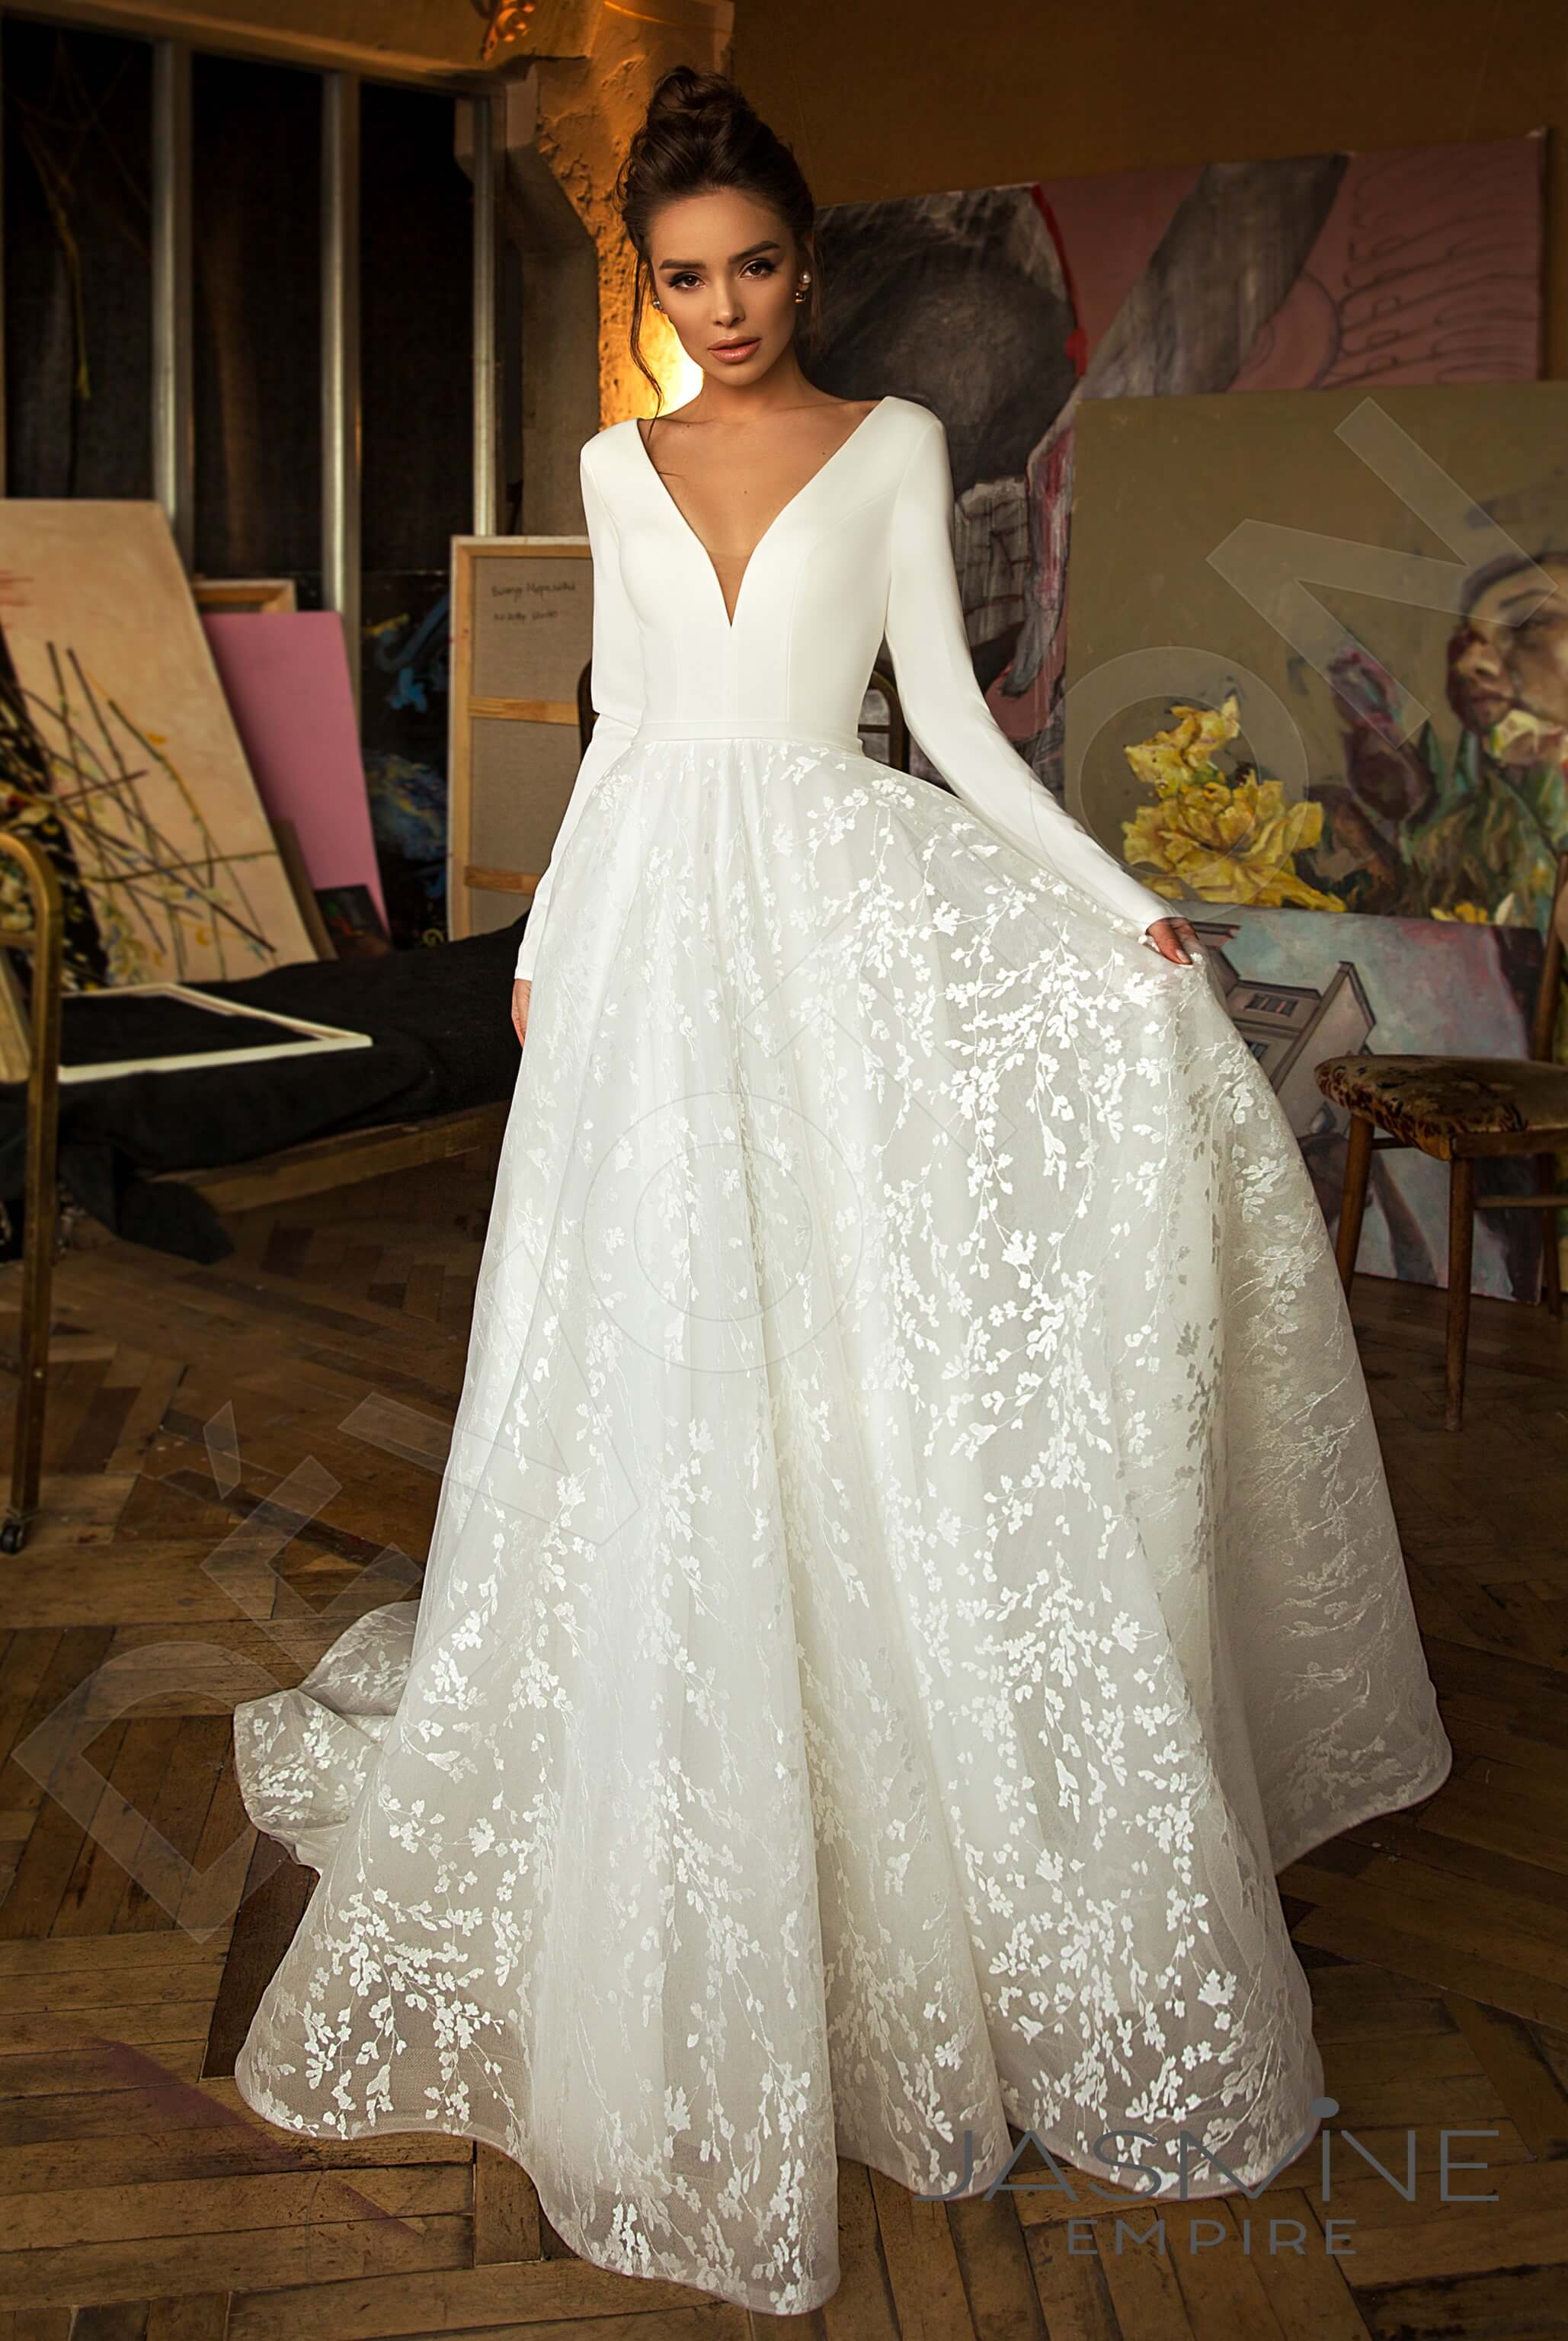 My Online Wedding Dress (Buying) Experience! - HenjoFilms